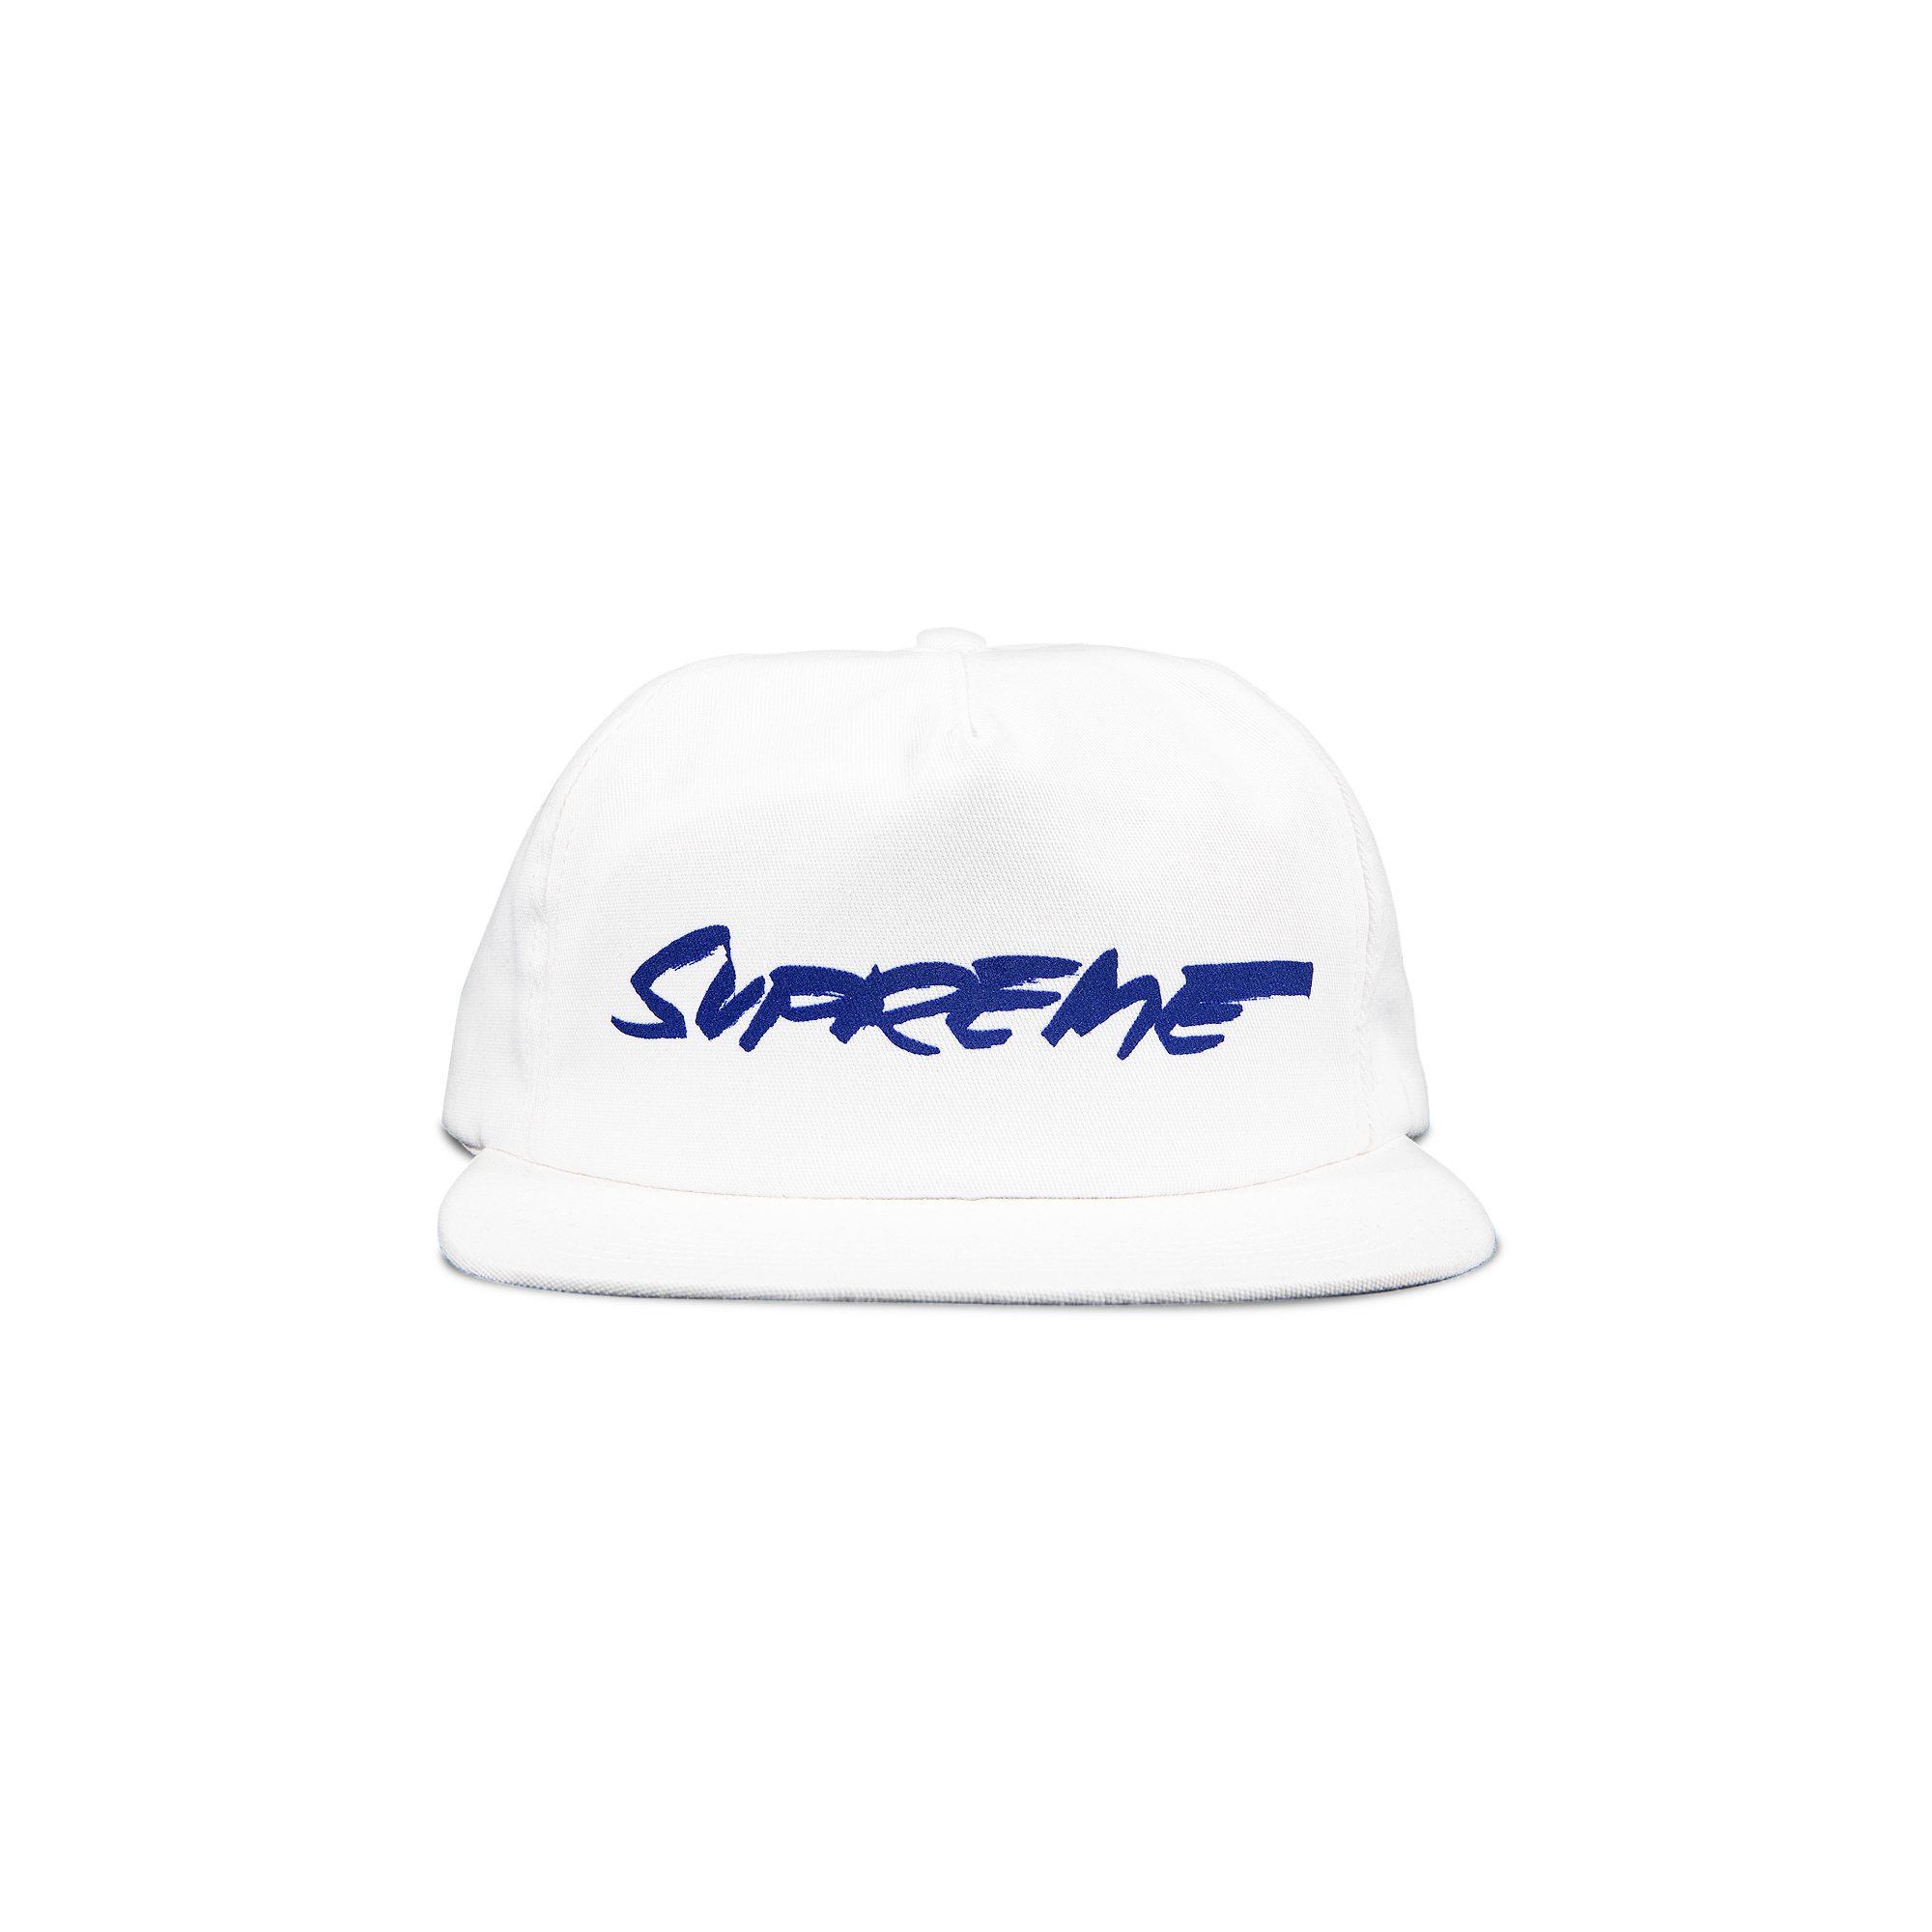 Пятипанельный логотип Supreme Futura, белый цвет пятипанельный логотип supreme bones черный